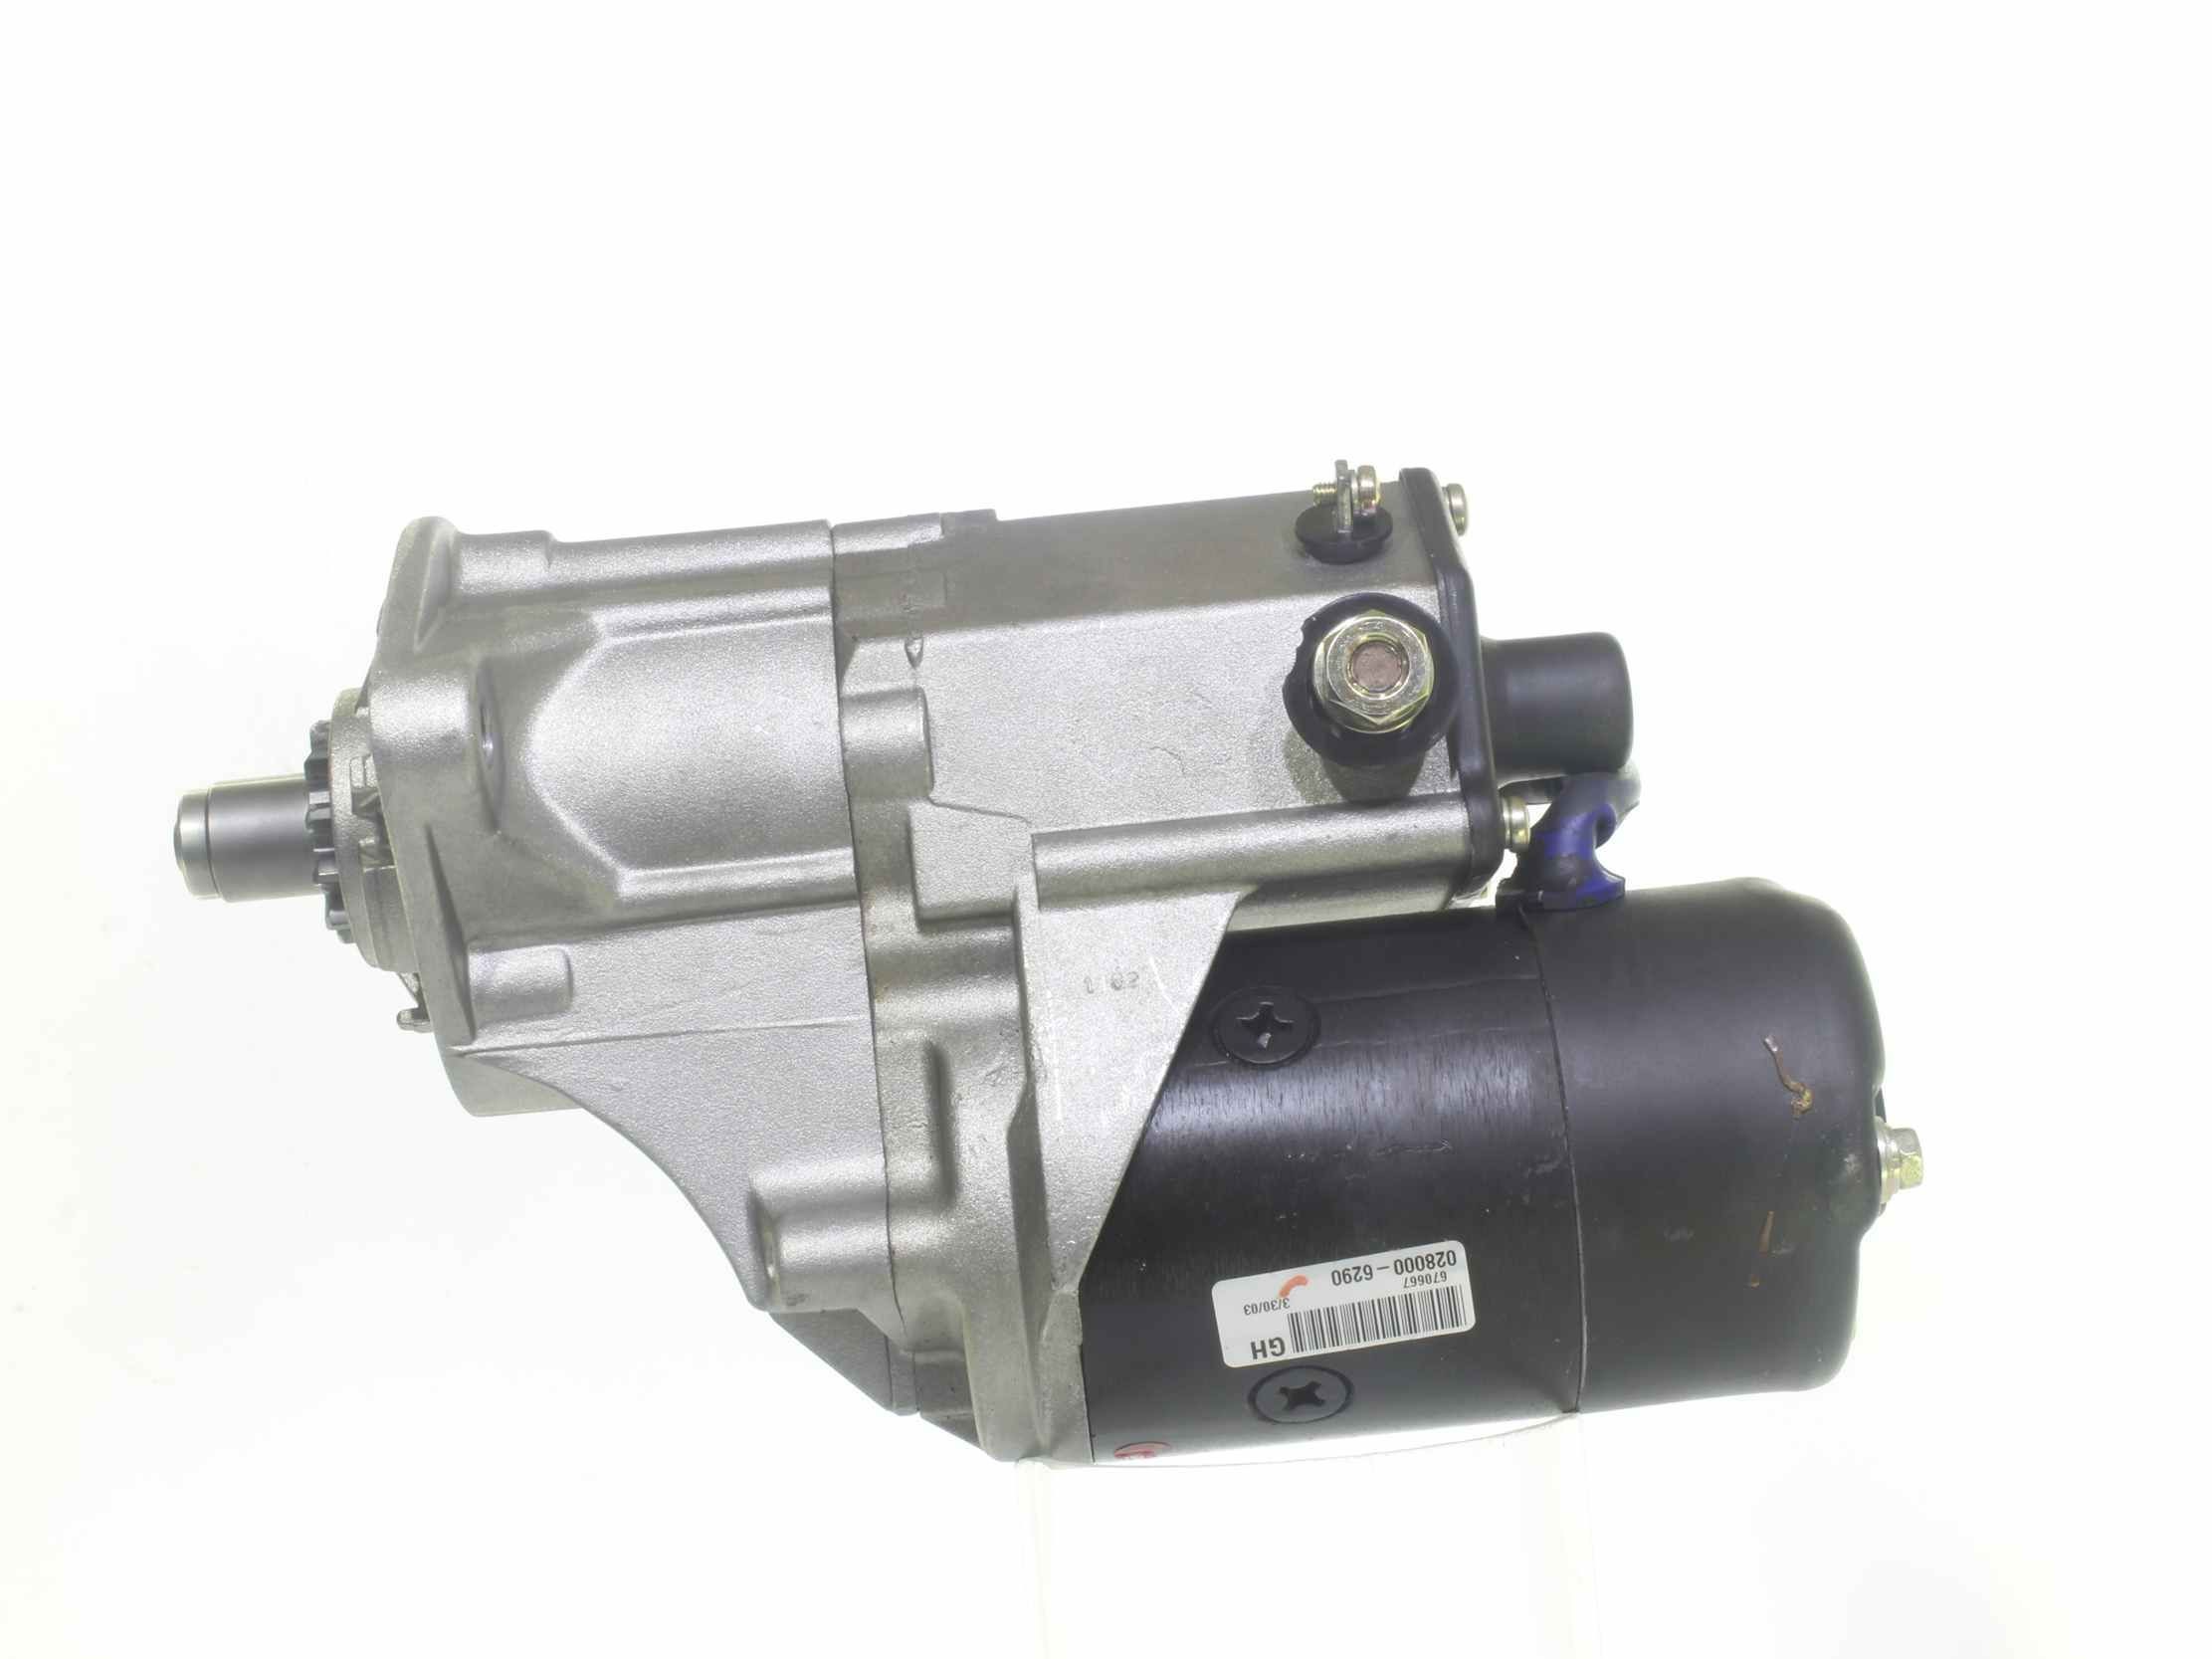 10440148 Engine starter motor ALANKO STR70265 review and test